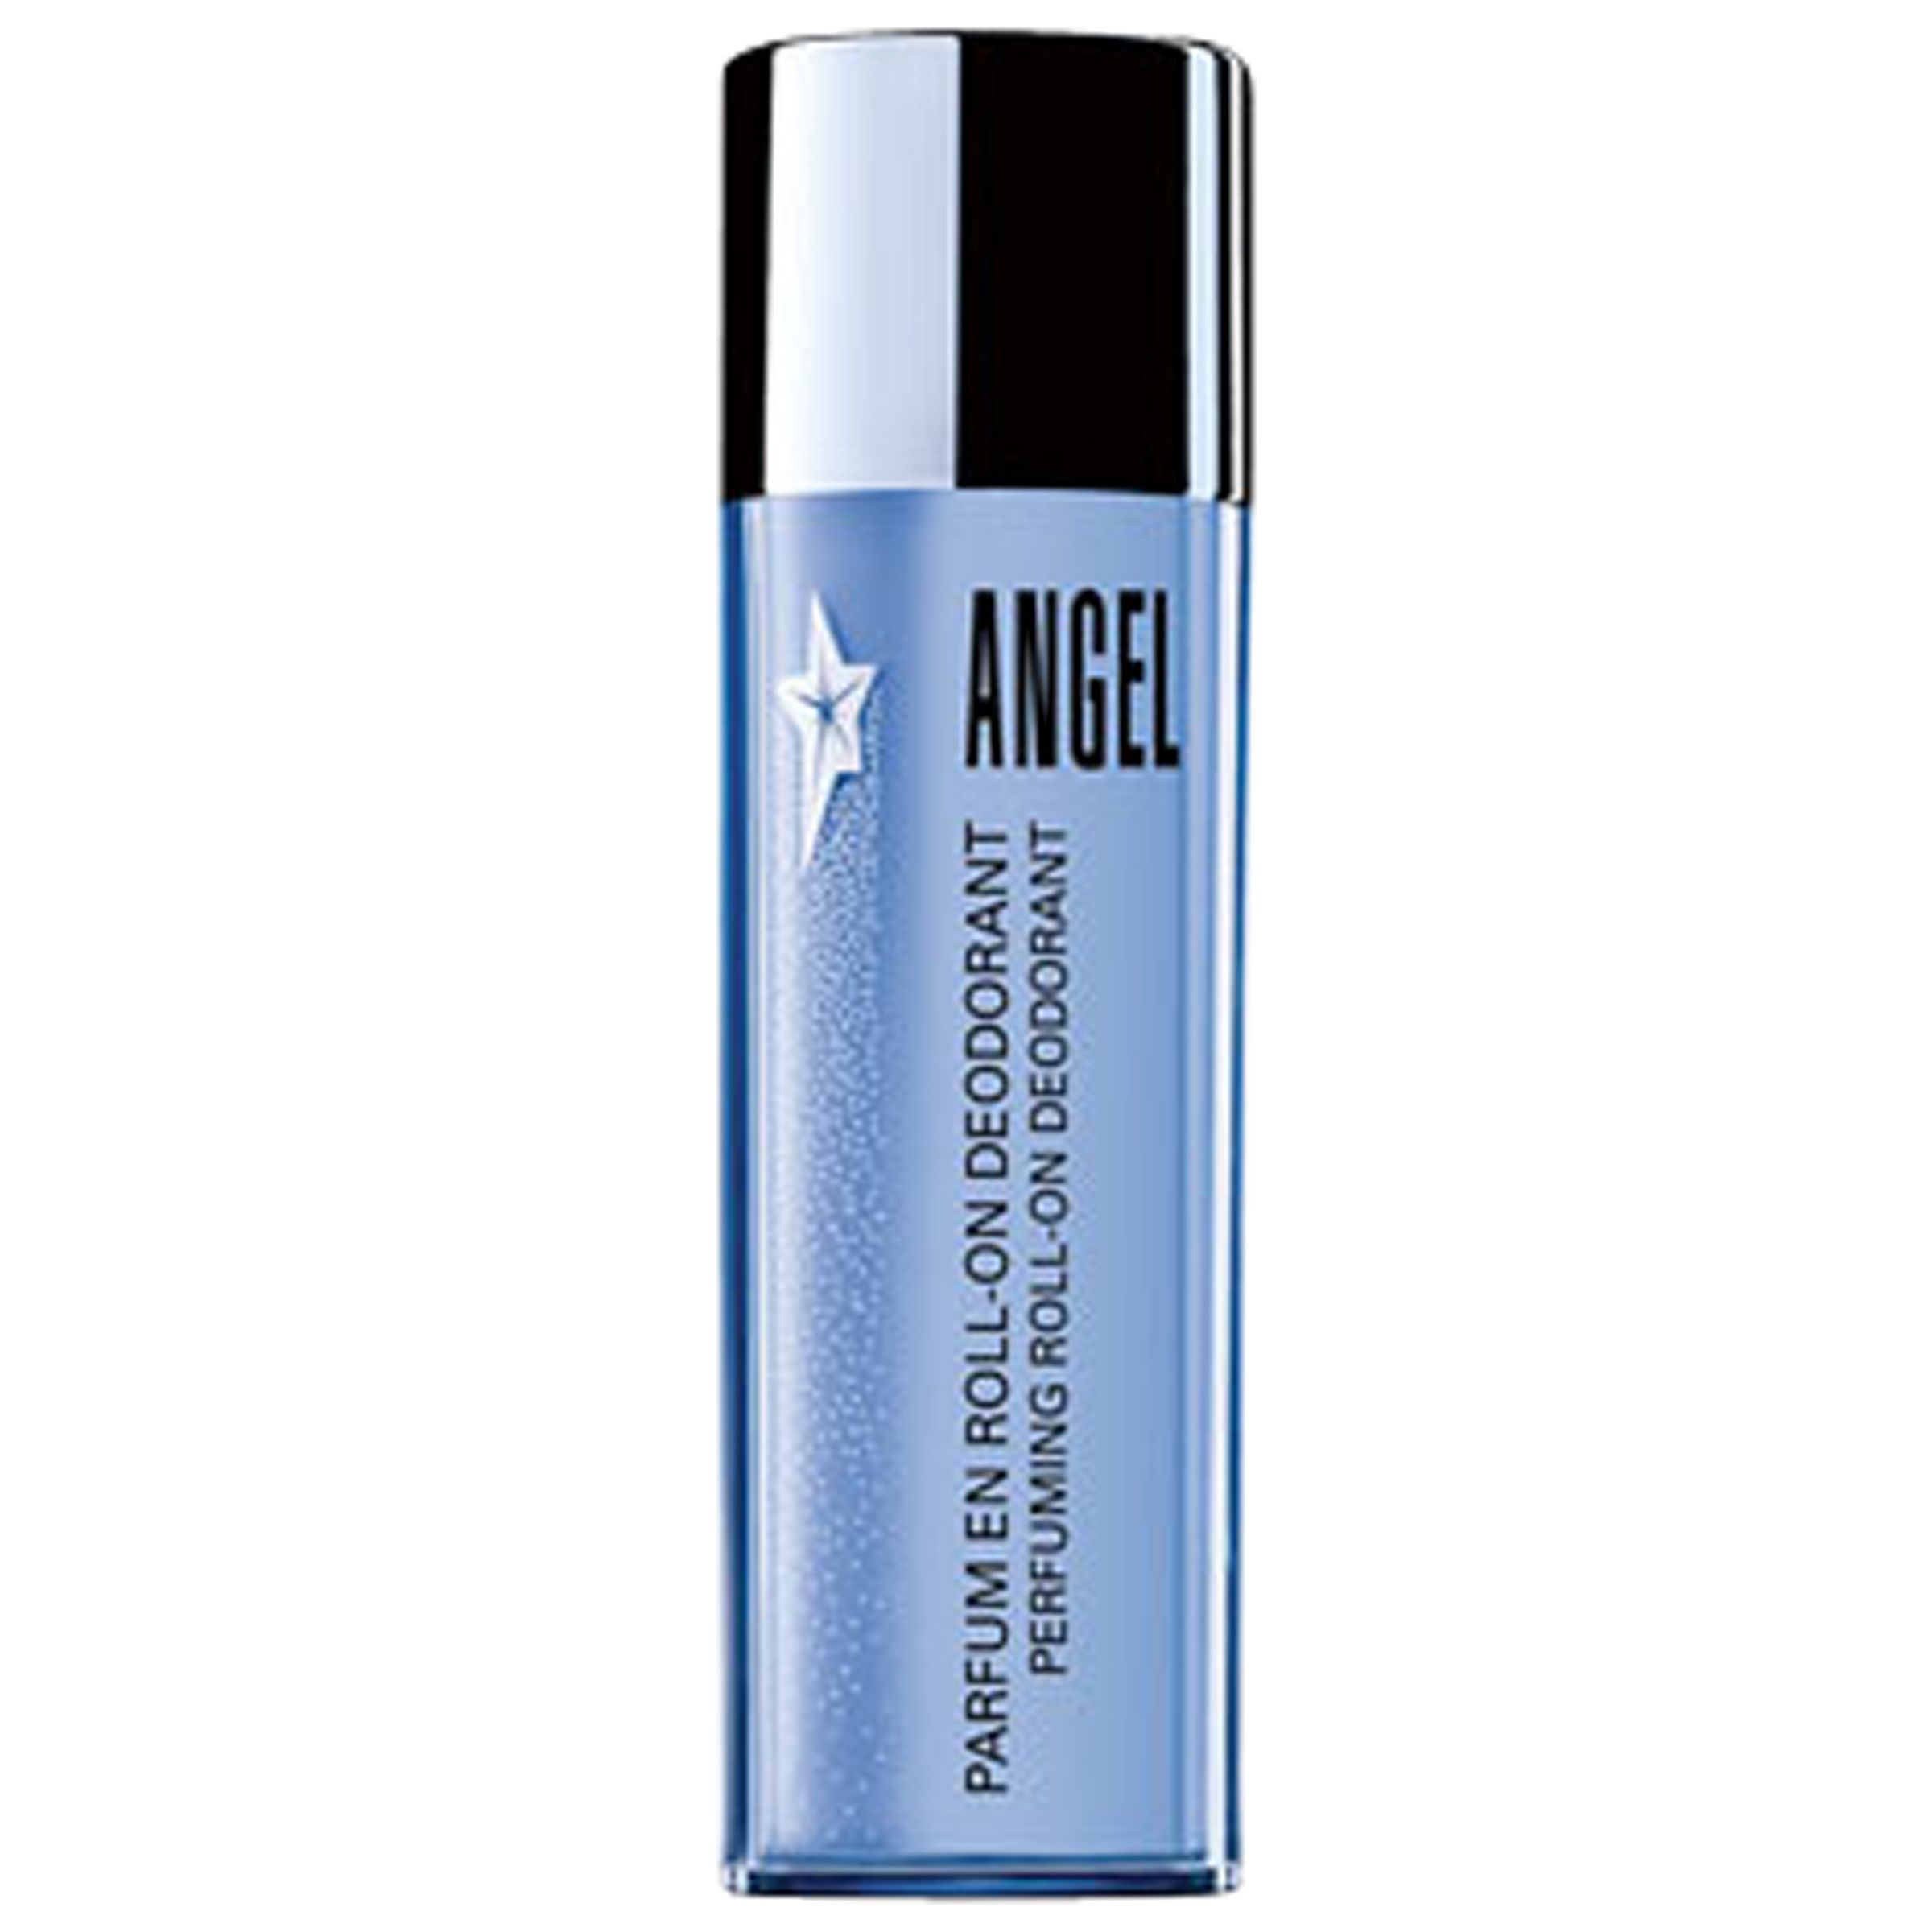 Mugler Angel Perfuming Deodorant Roll On, 50ml